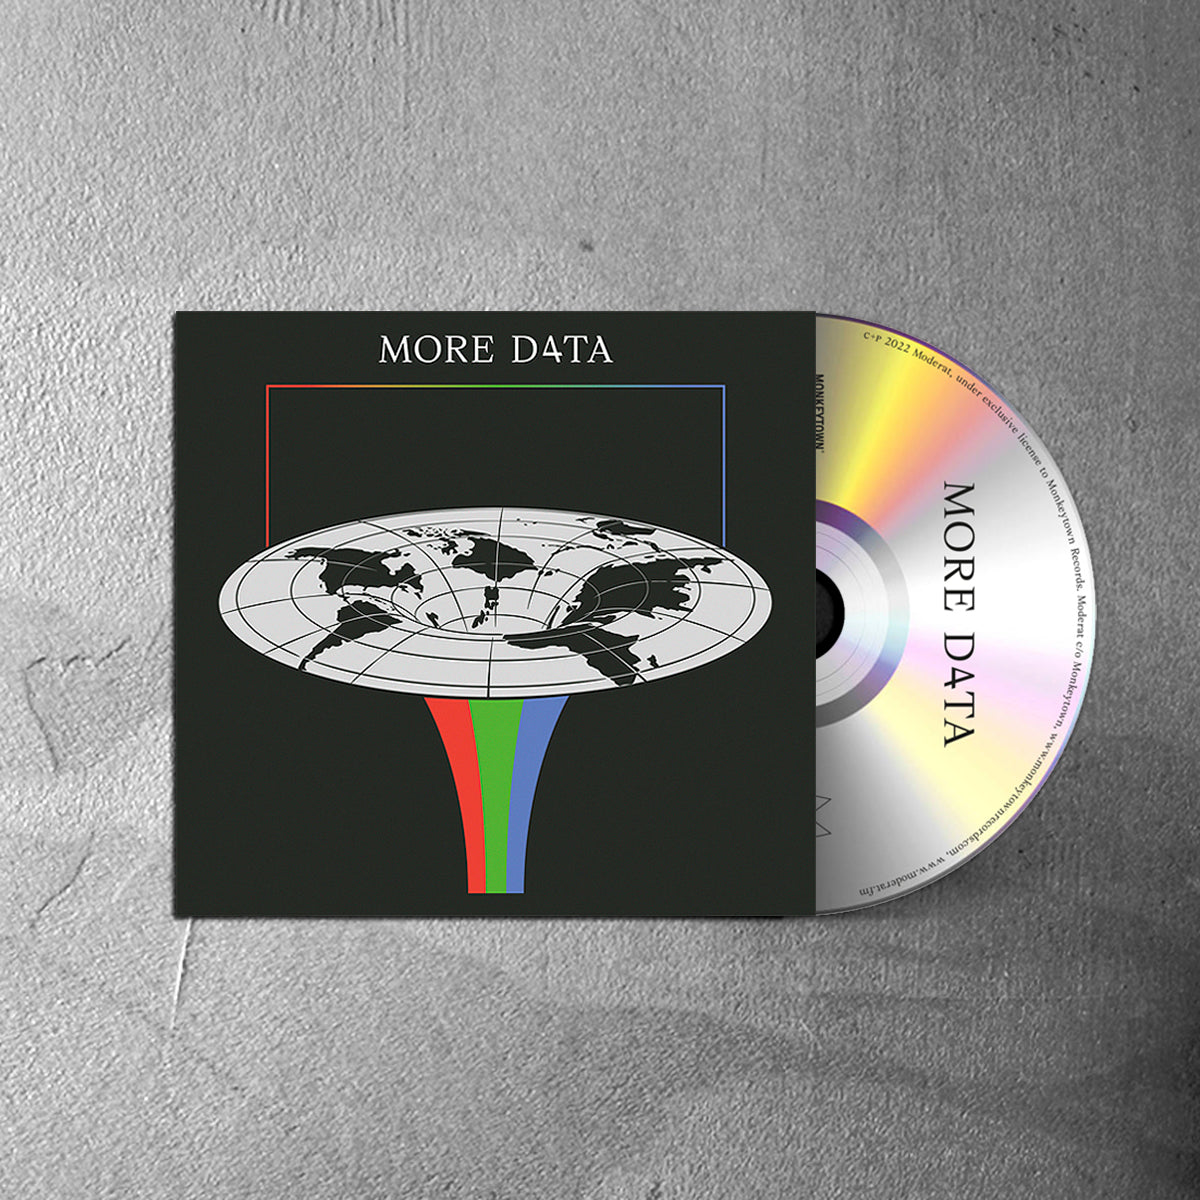 MODERAT - MORE D4TA CD